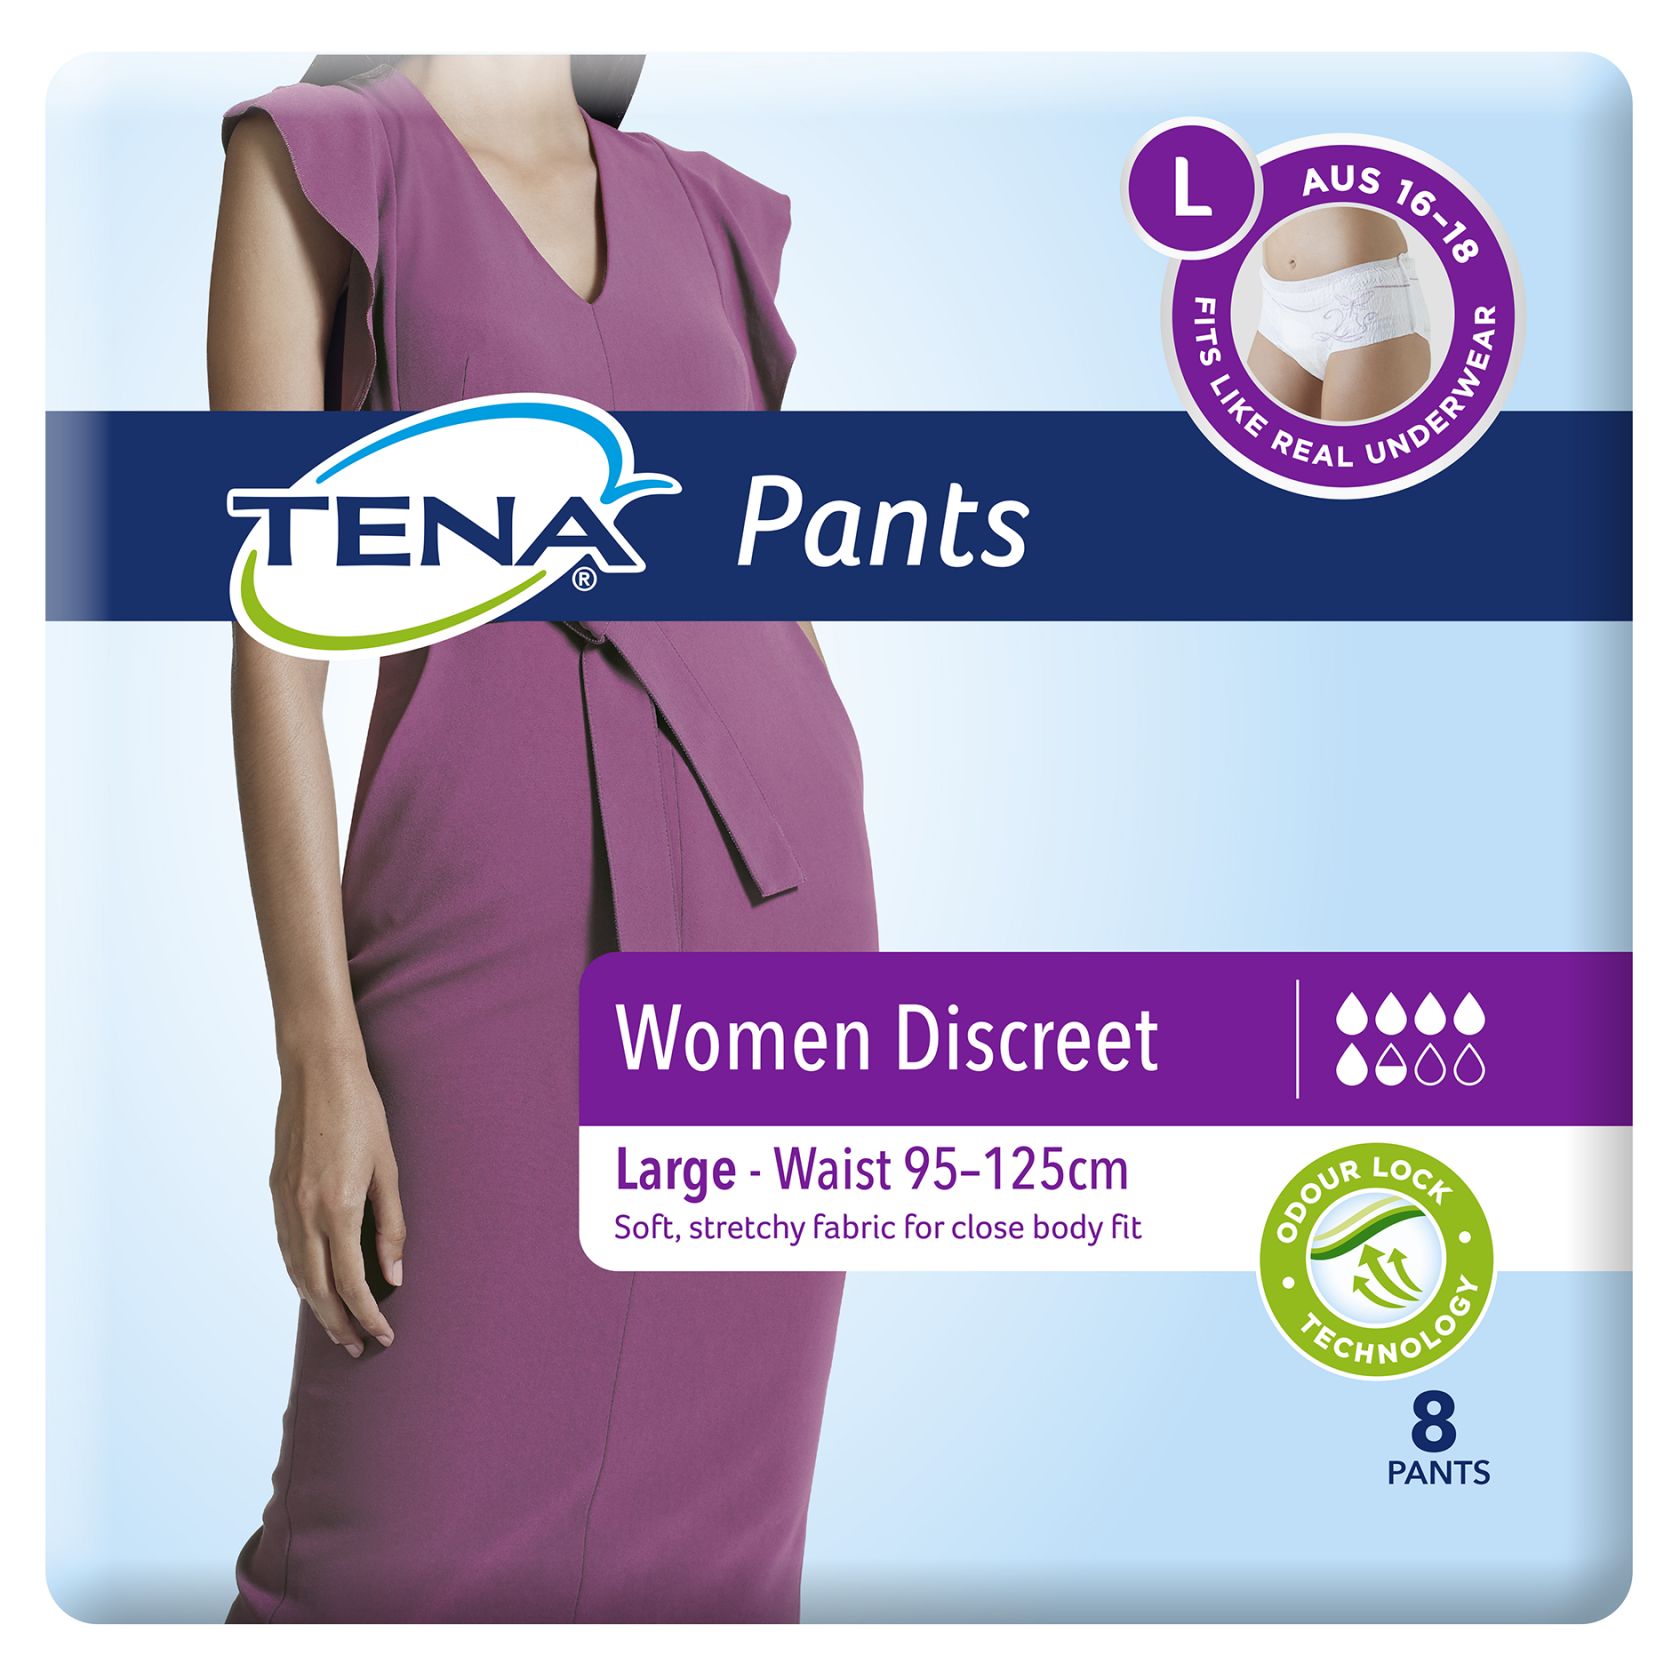 TENA Pants Women Discreet Large